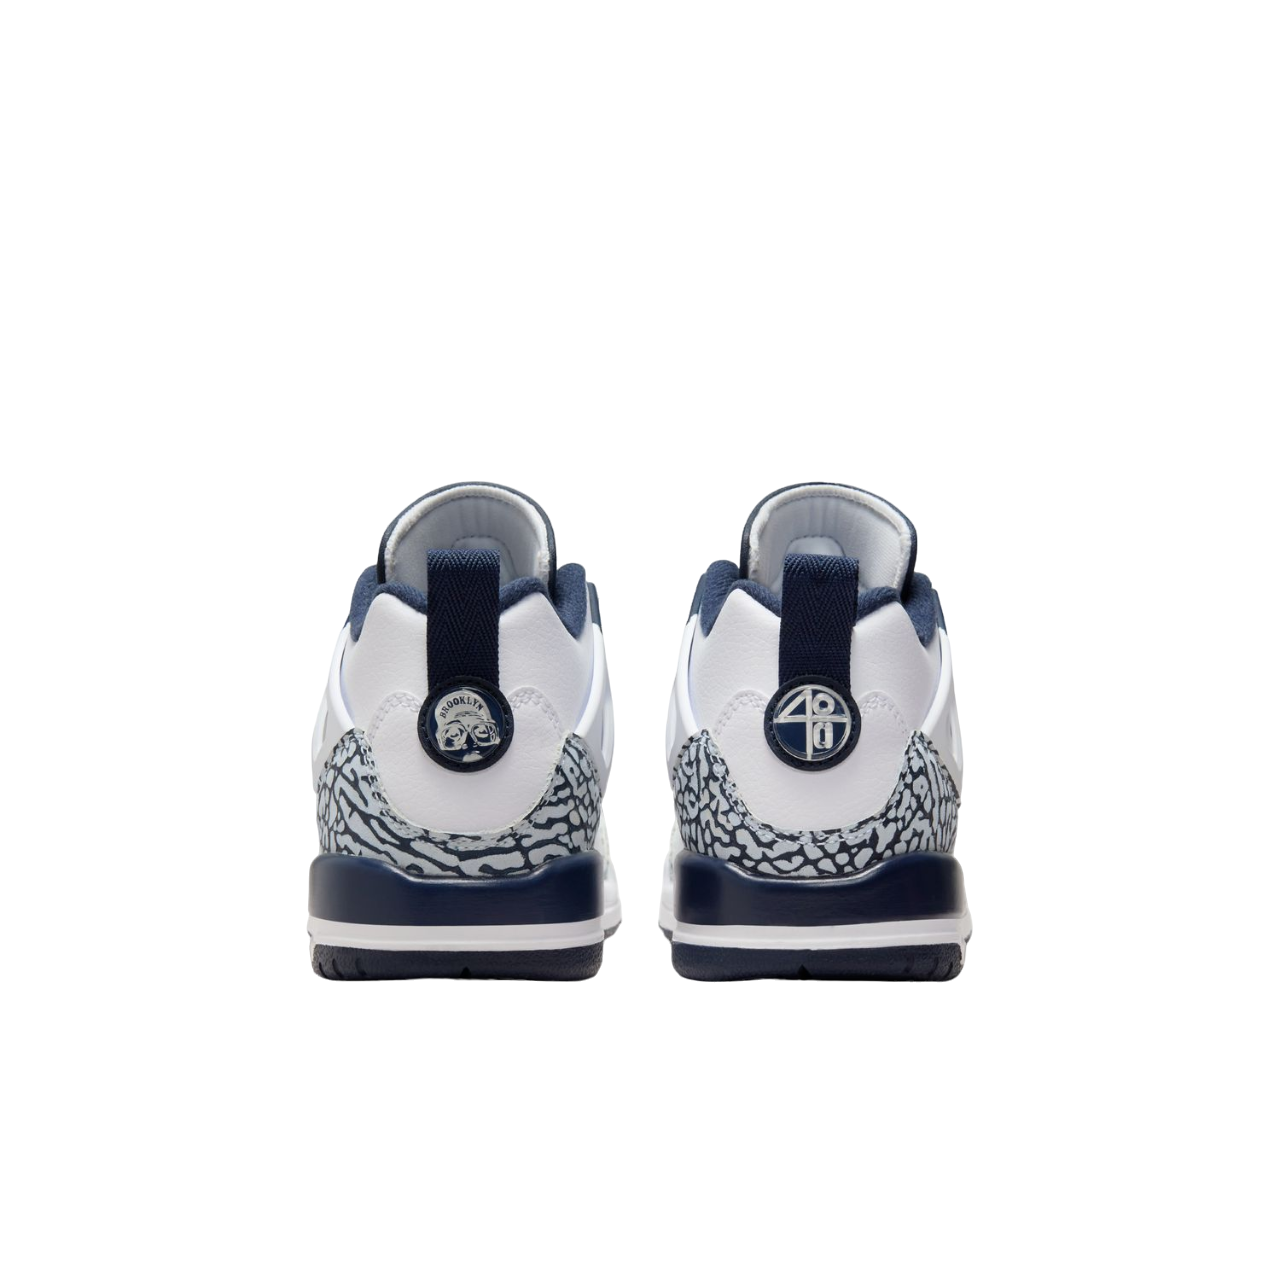 Jordan scarpa sneakers da ragazzo Spizike Low FQ3950-104 bianco-blu